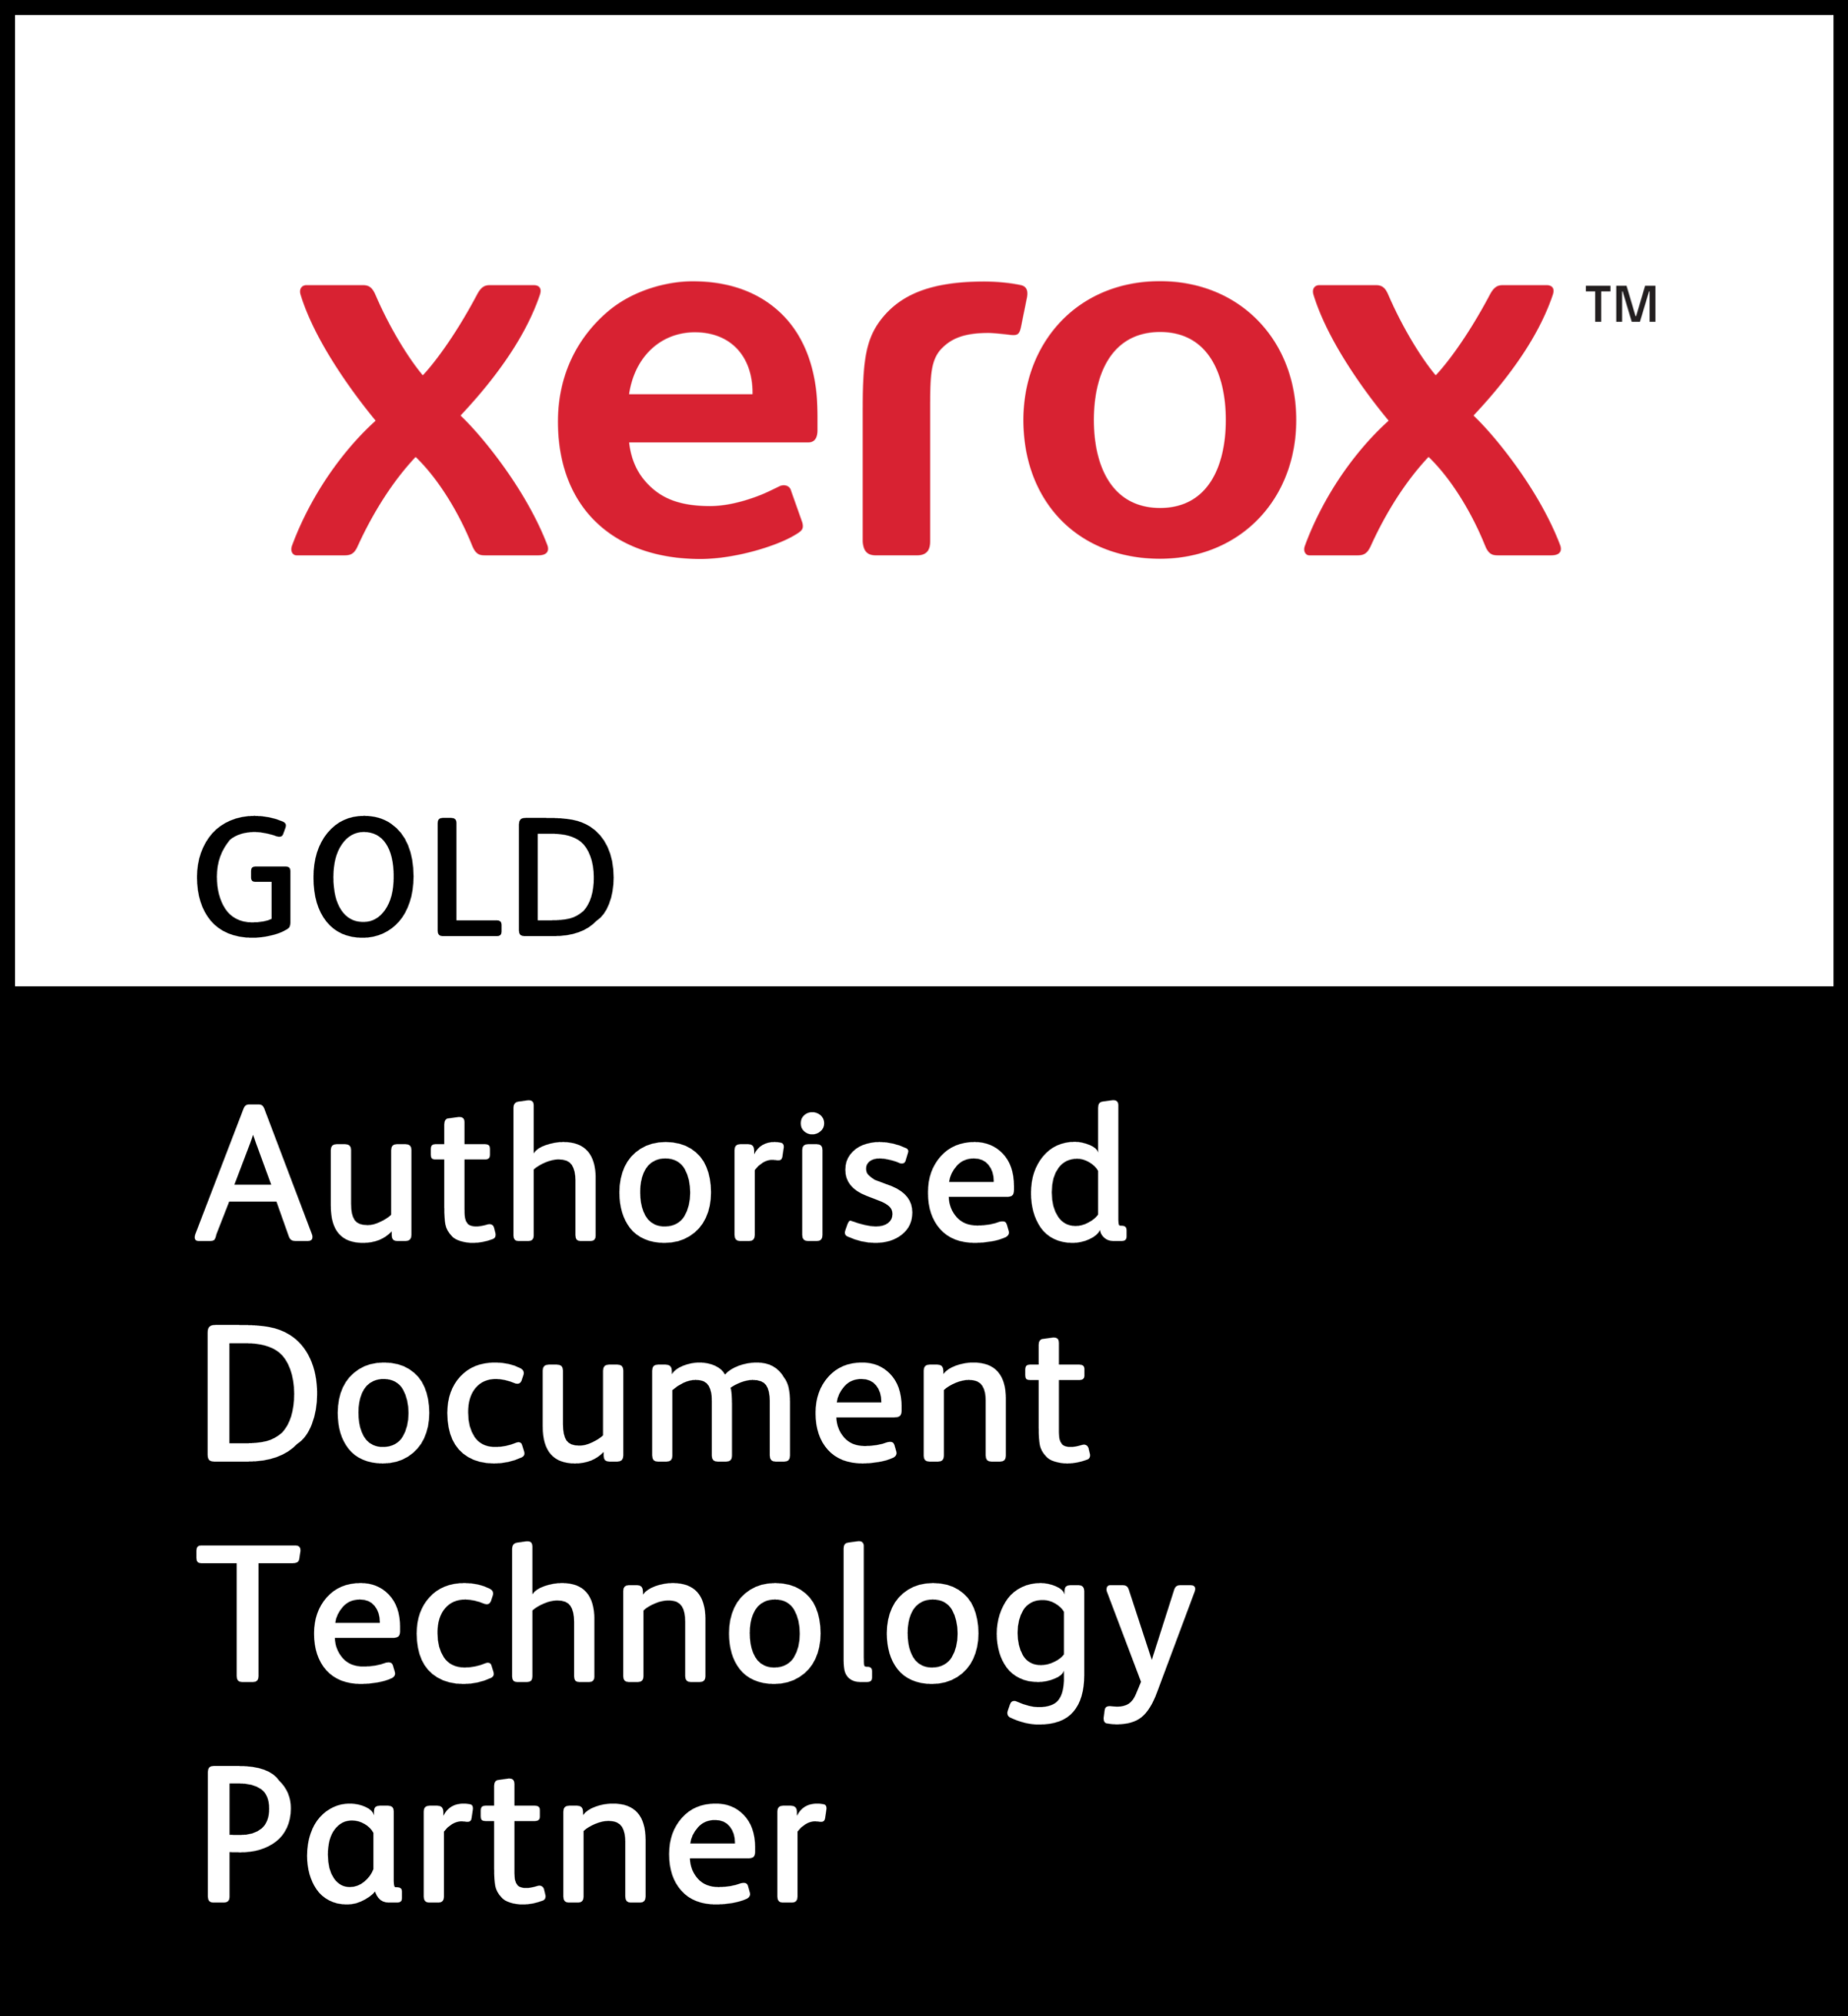 Xerox Gold partner